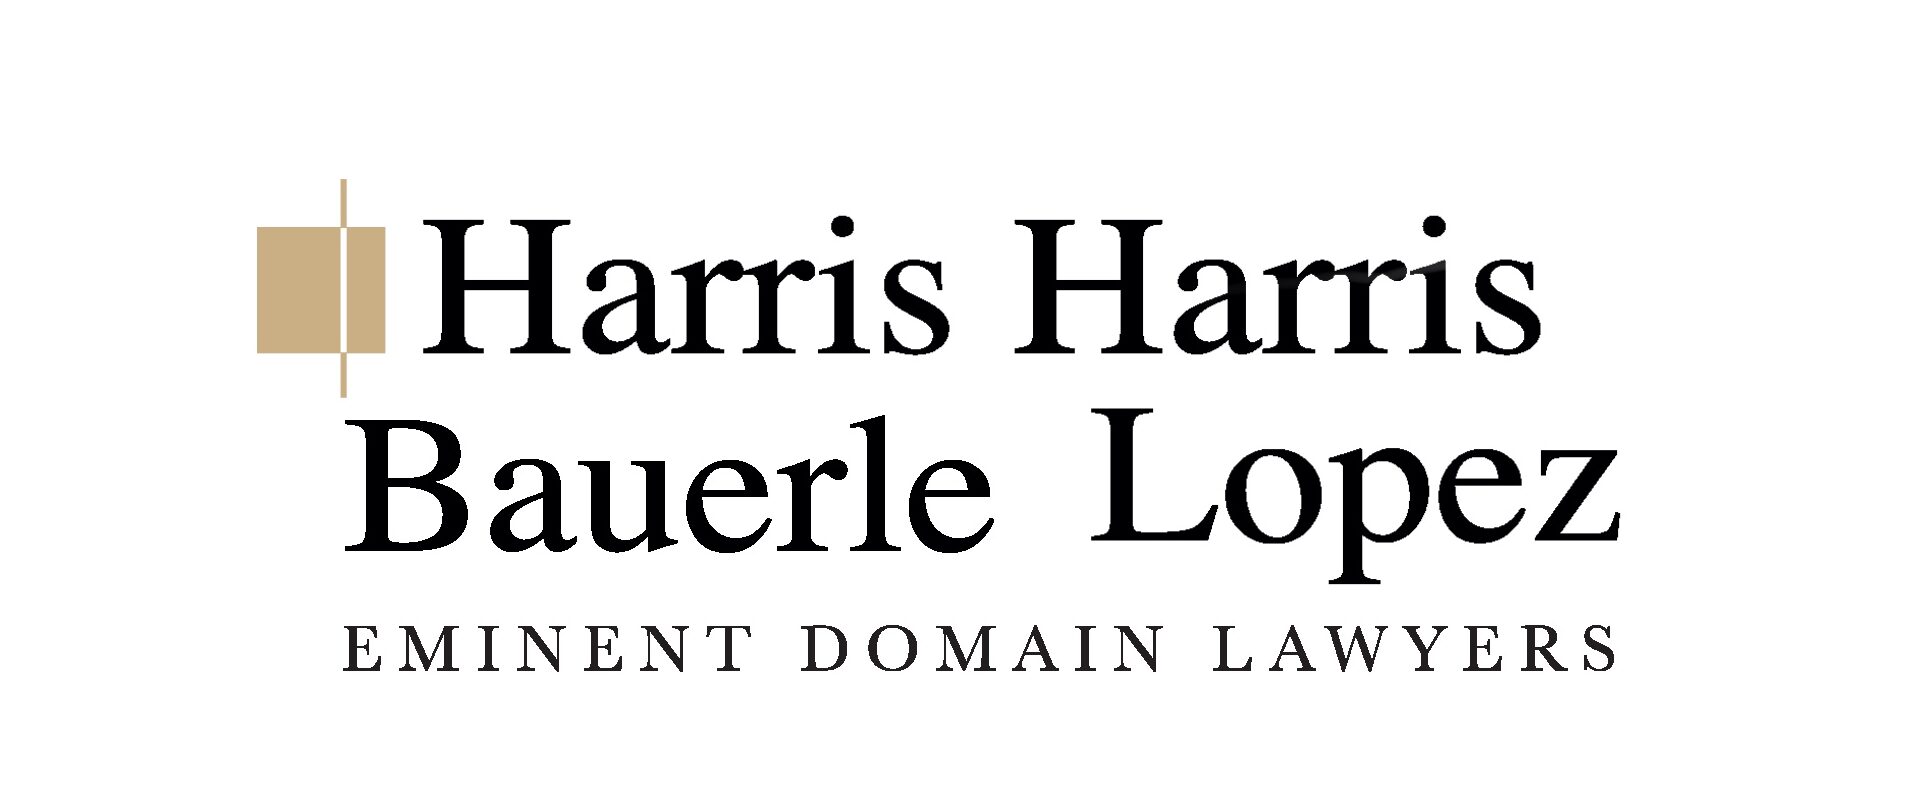 Harris Harris Bauerle Lopez